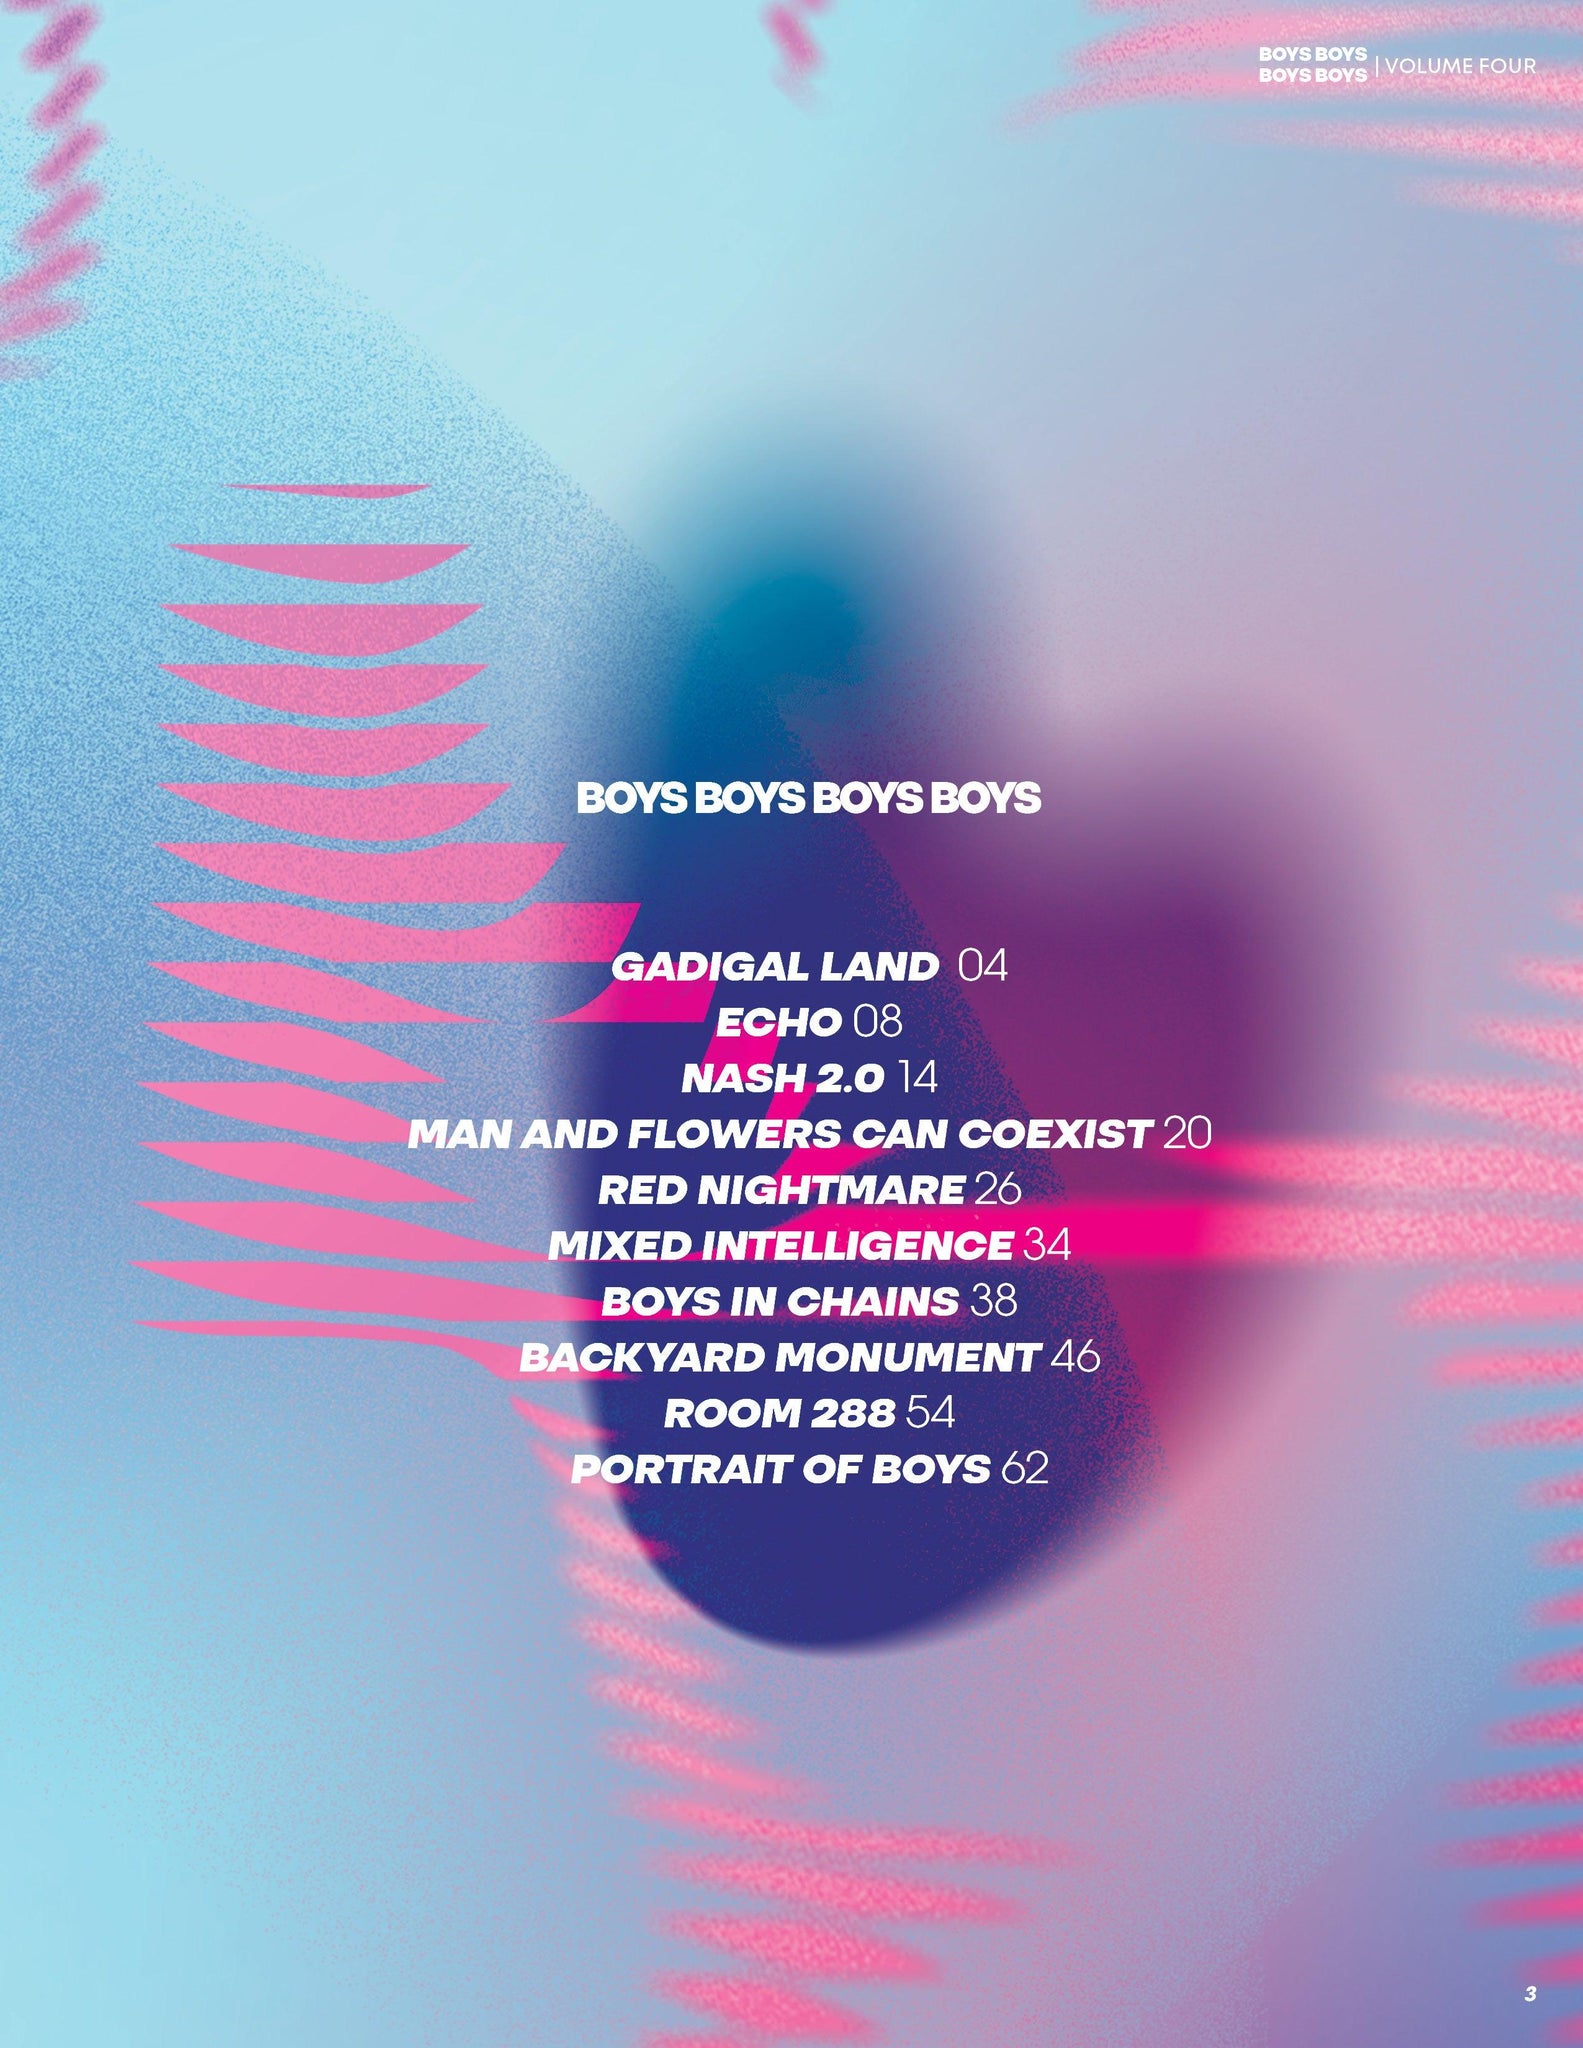 BOYS BOYS BOYS BOYS | VOLUME FOUR | ISSUE #10 - Mob Journal